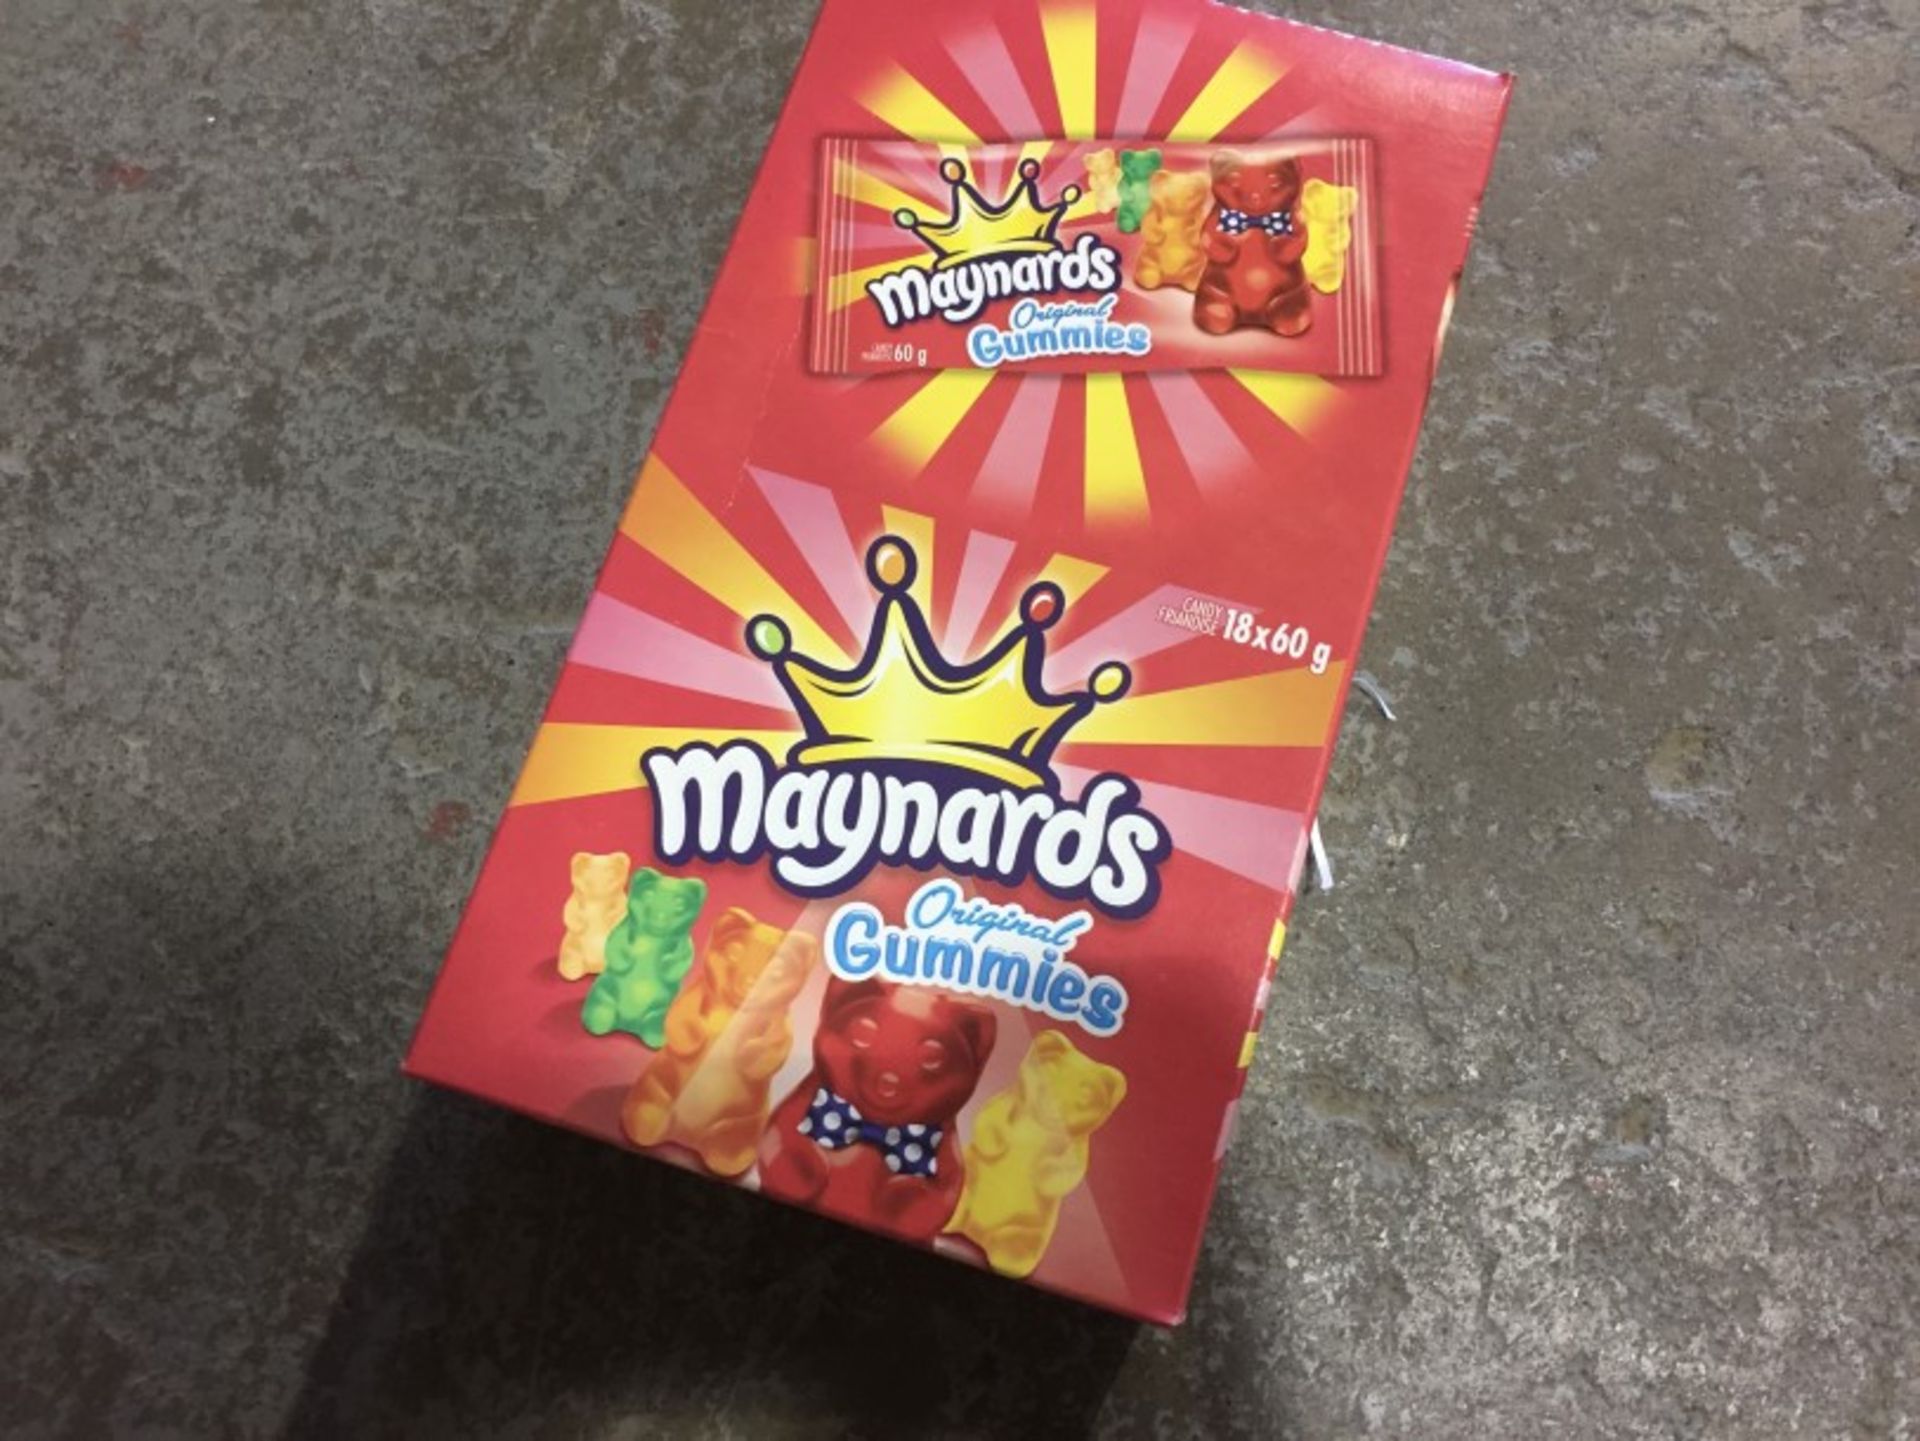 Maynard's Original Gummies